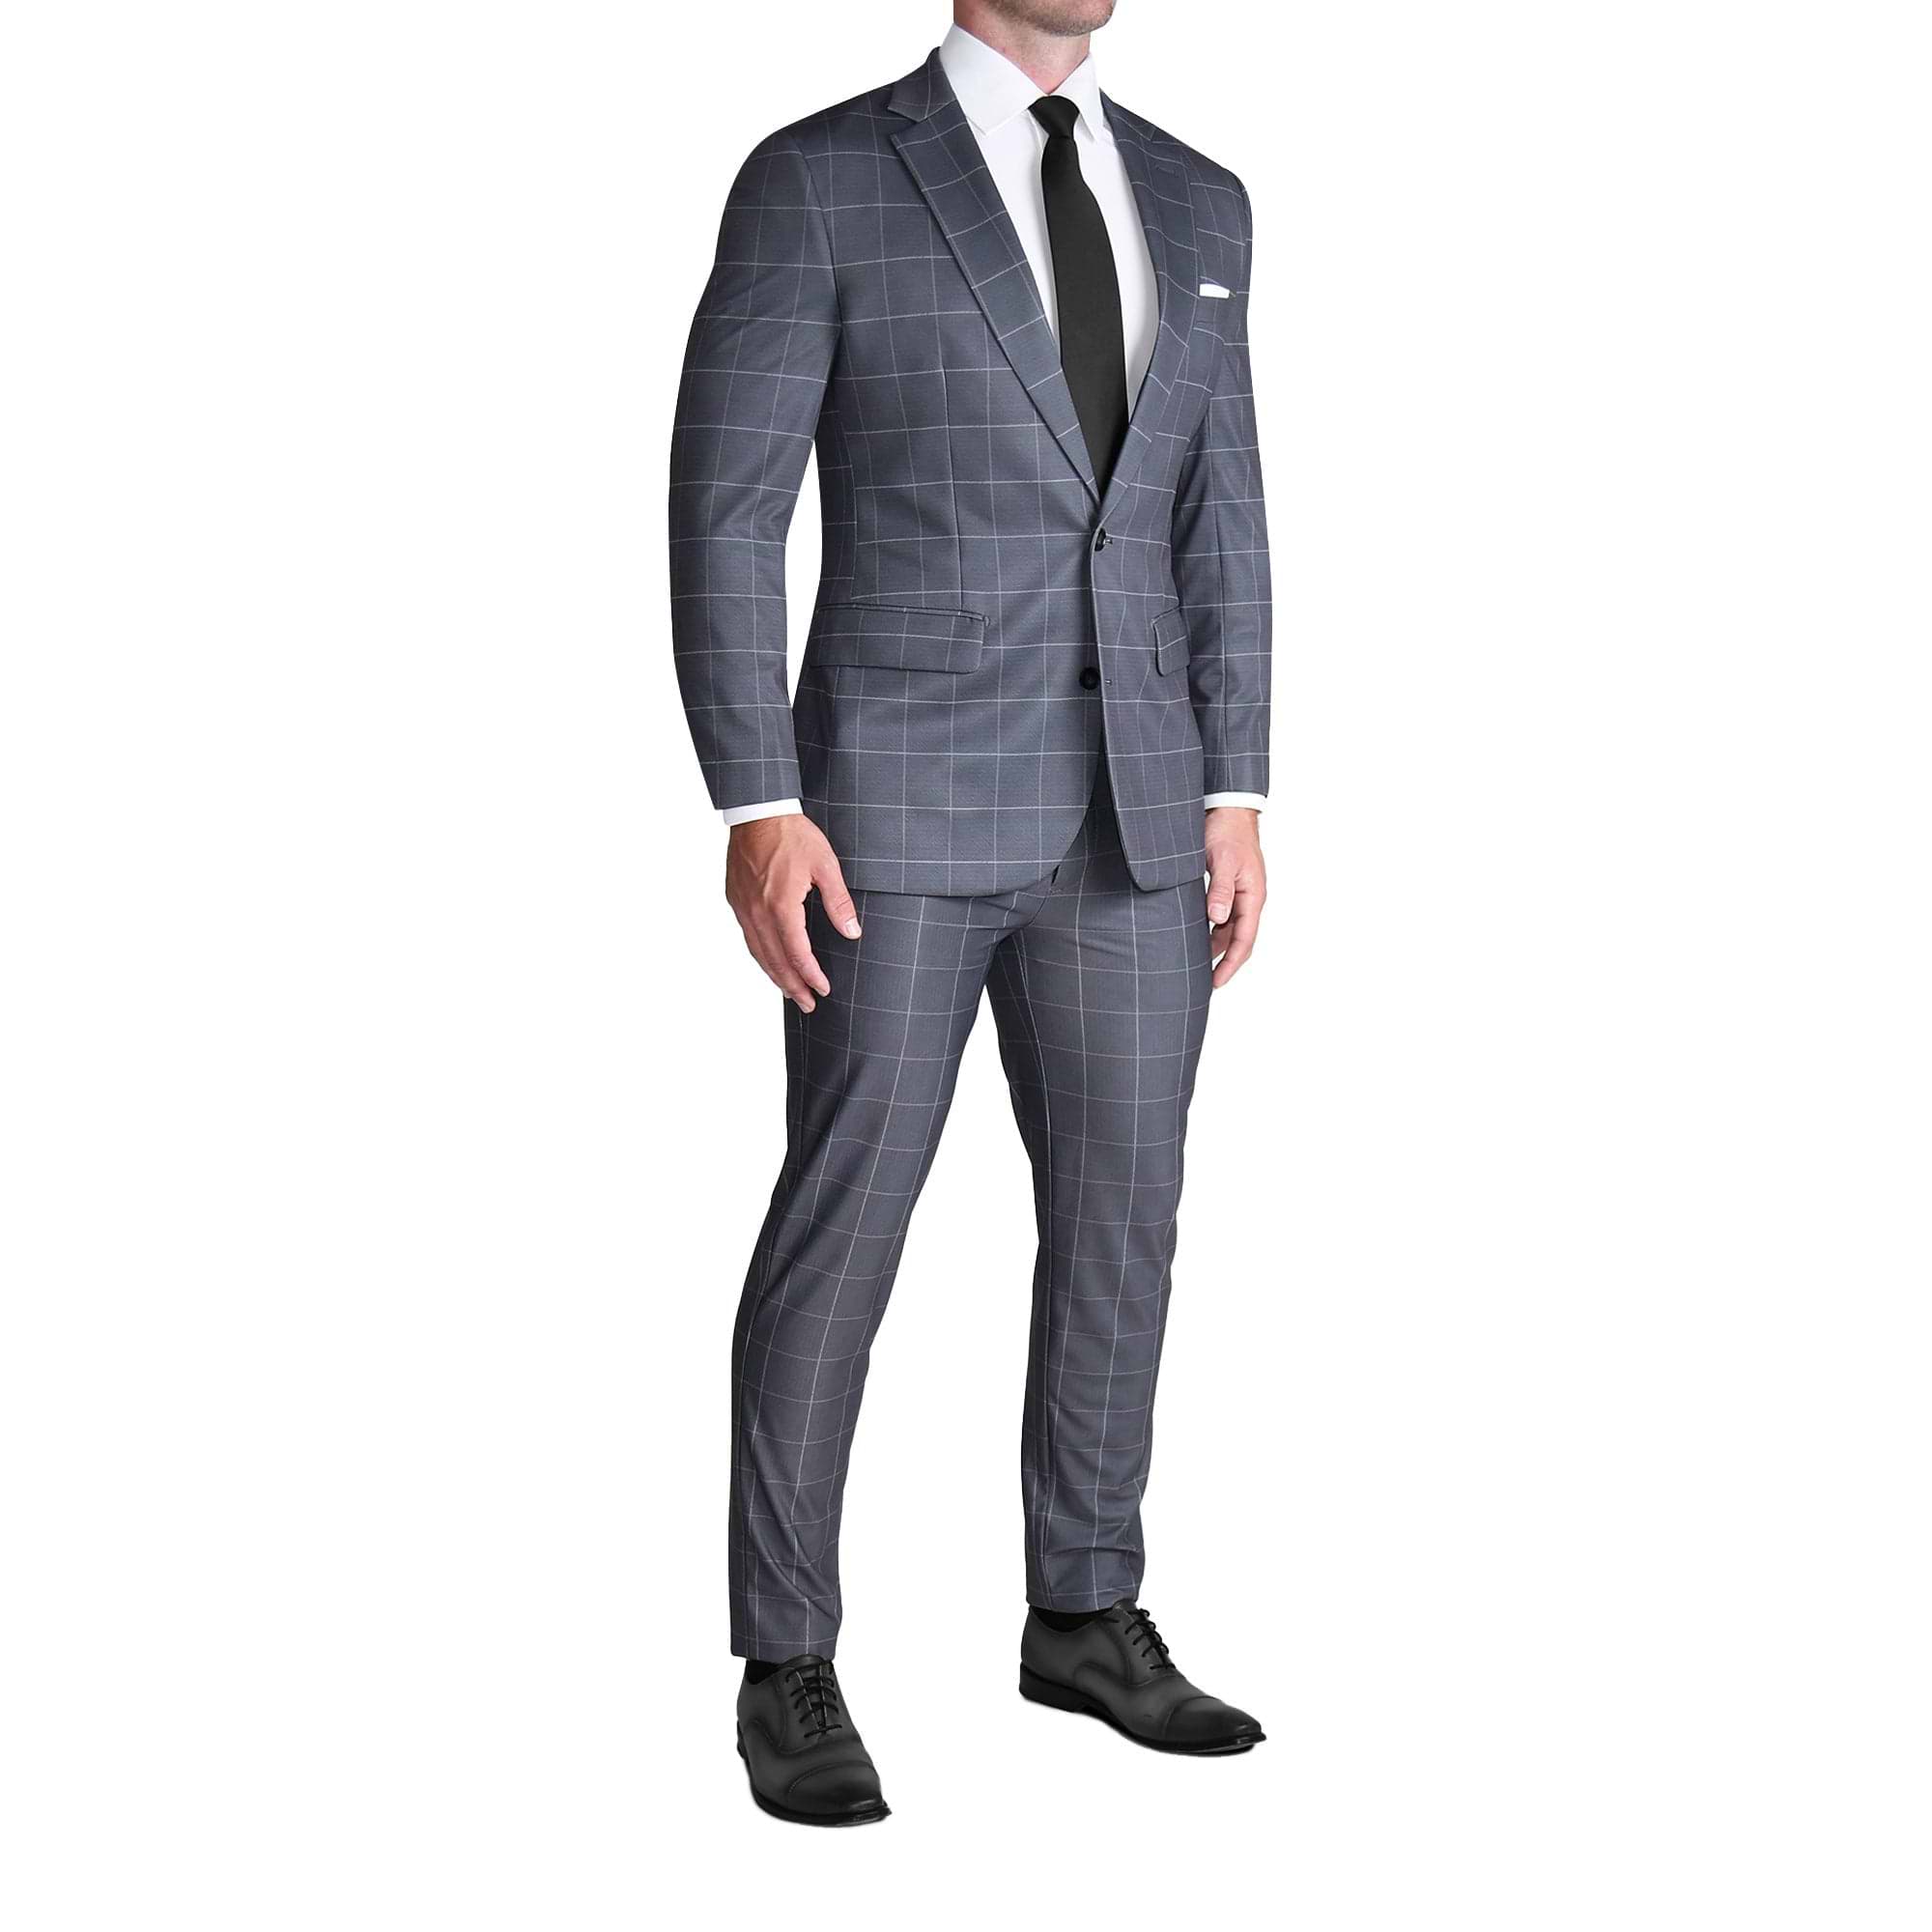 Brushed Tech Suit Pant - Grey & White Big Windowpane